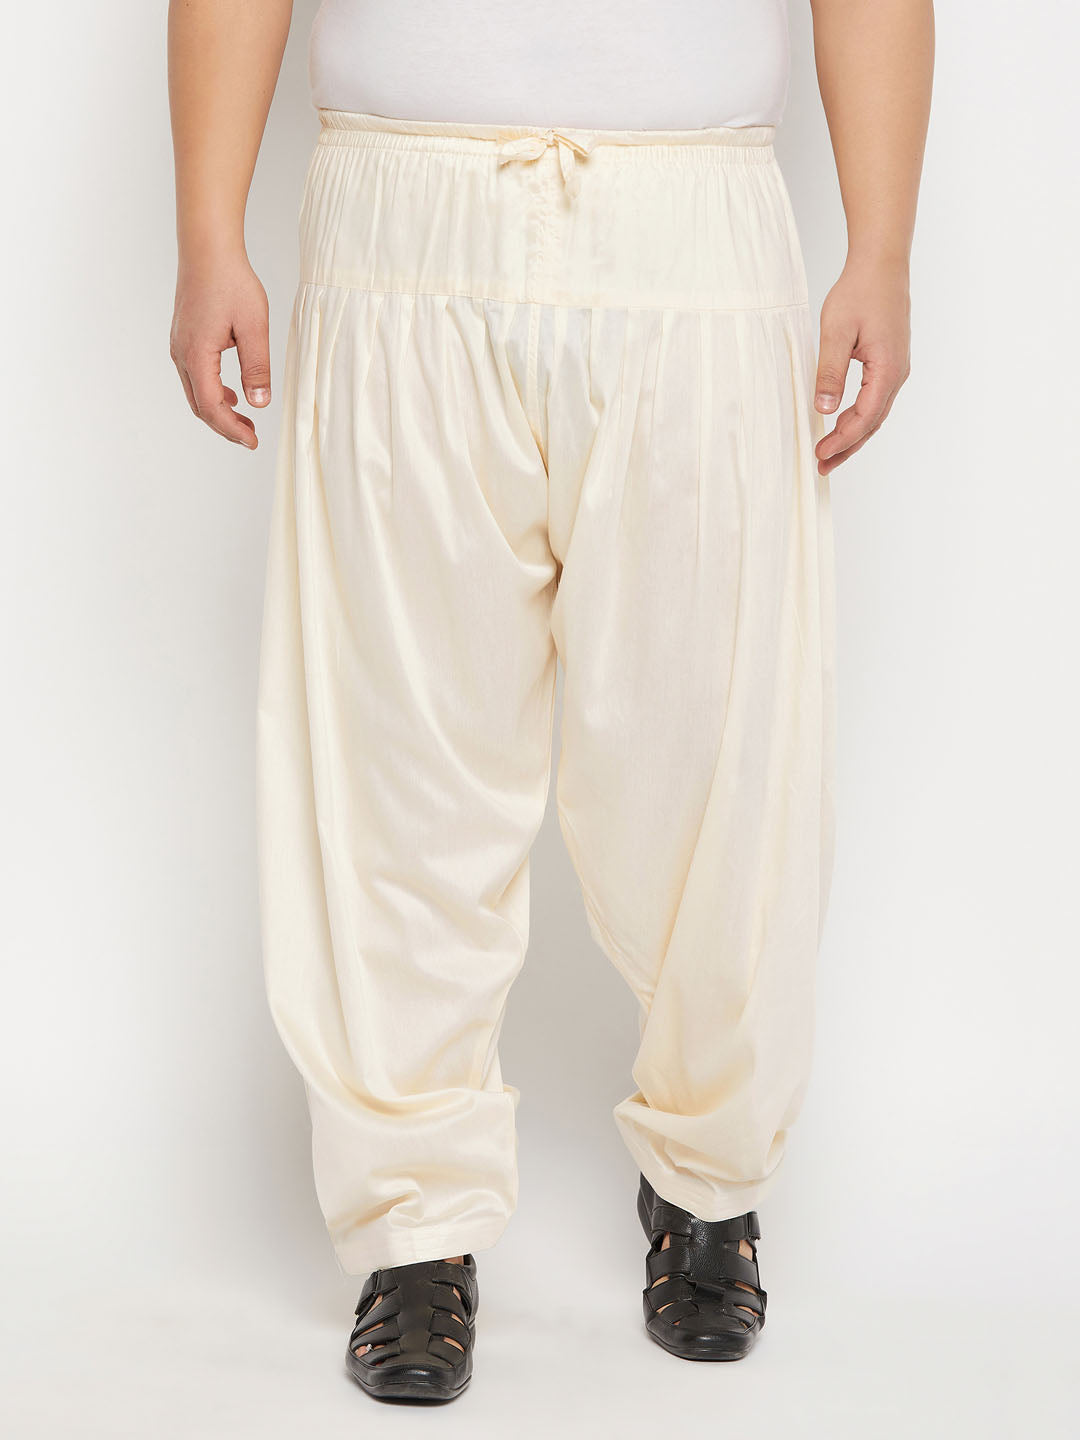 Patiala Salwar Pants Dupion Silk For Men Handmade Festival Occasion Party  Wear | eBay